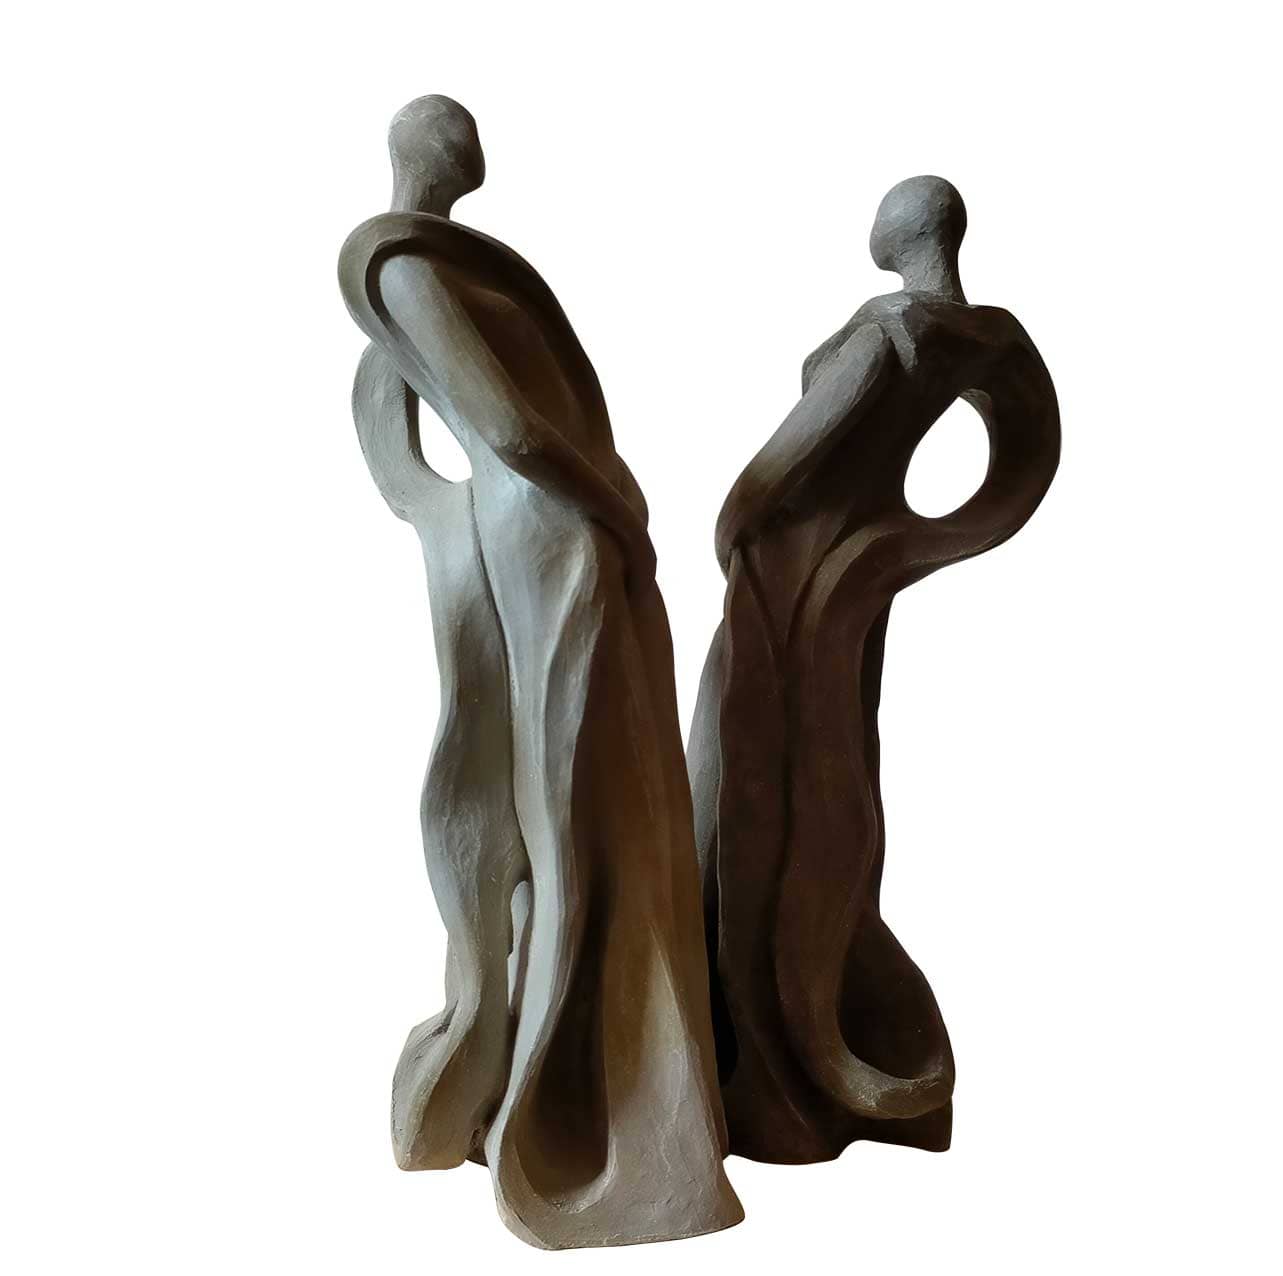 Metamorphosis 35|36 sculptures collection 2022
Denise Gemin author
view01